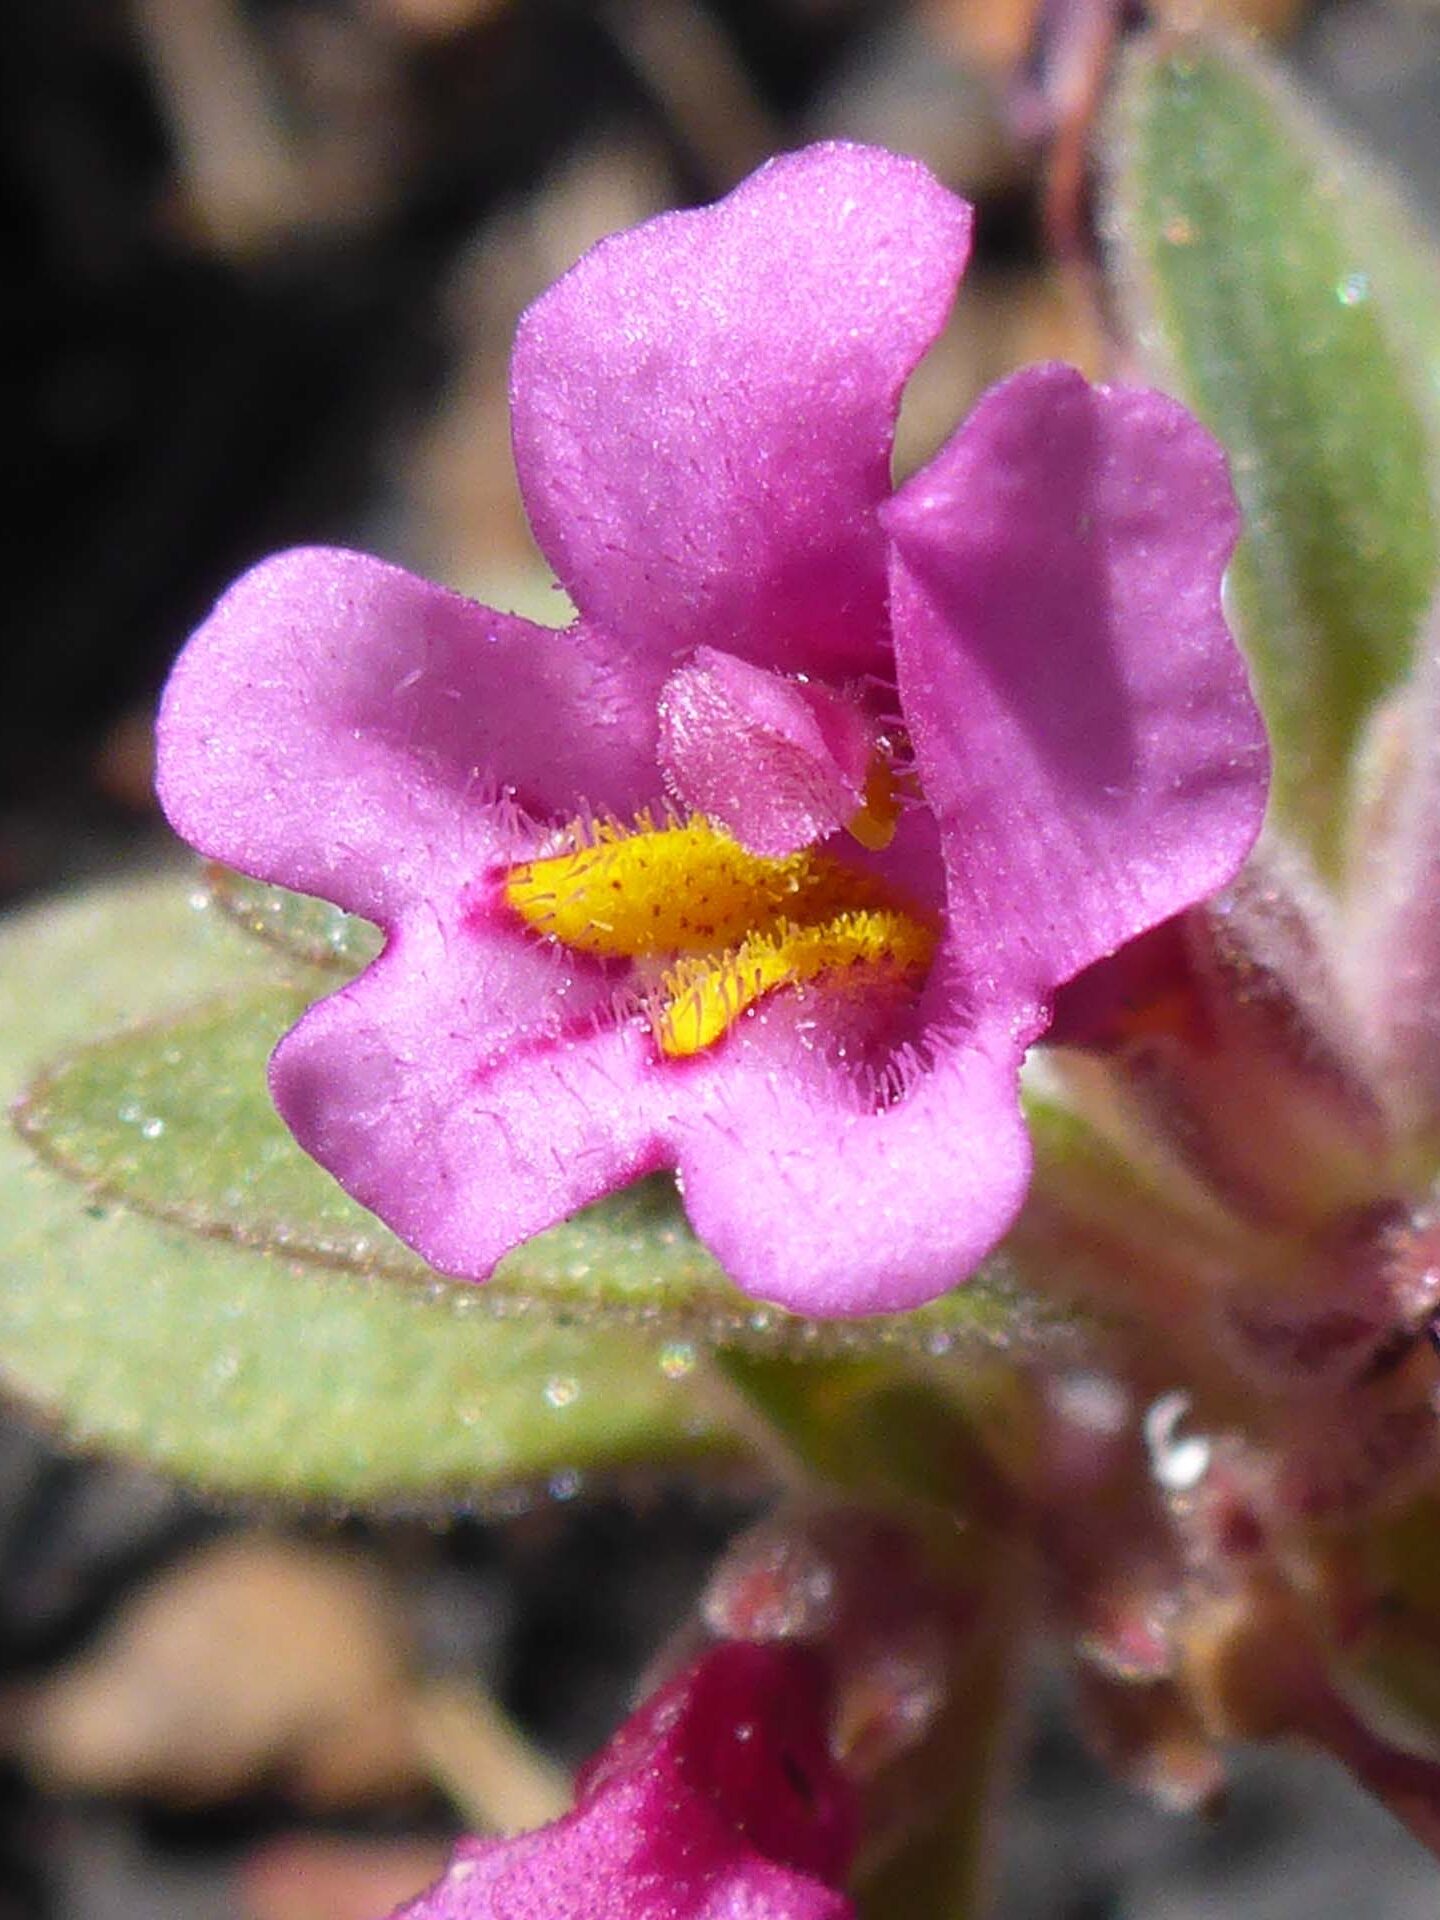 Dwarf purple monkey-flower close-up. D. Burk.